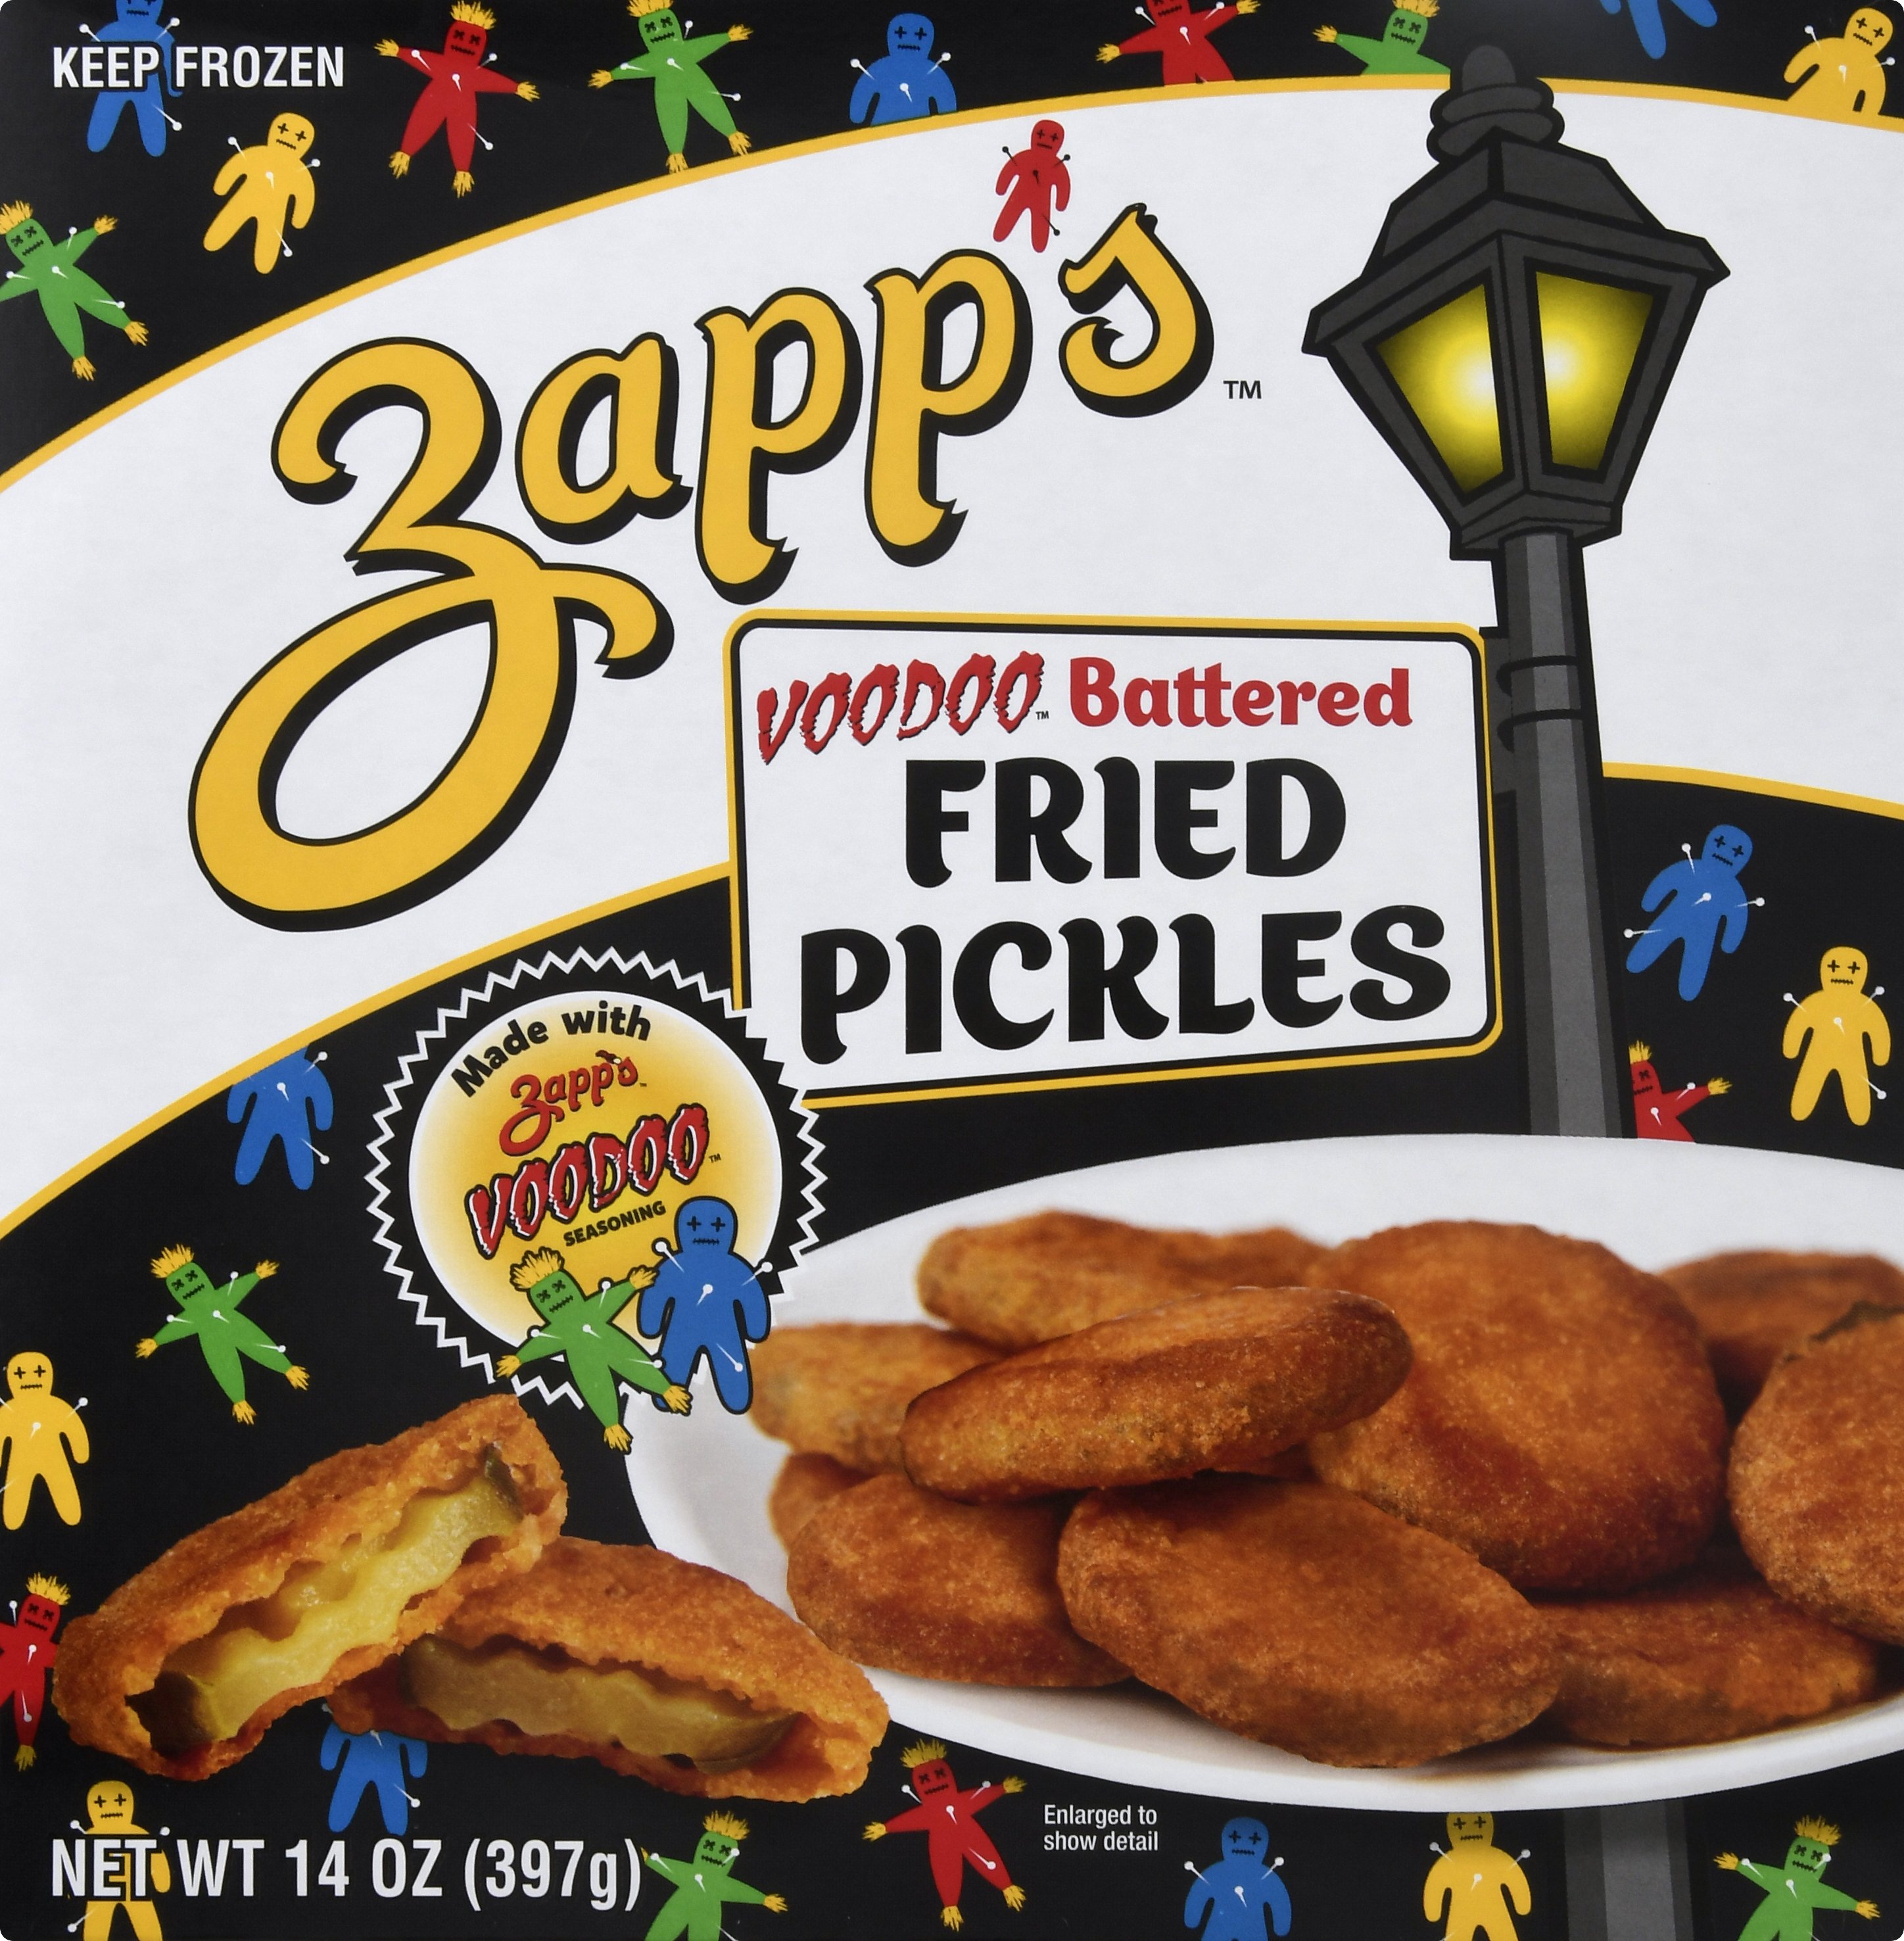 Zapps Vodoo Battered Fried Pickles - image 2 of 4